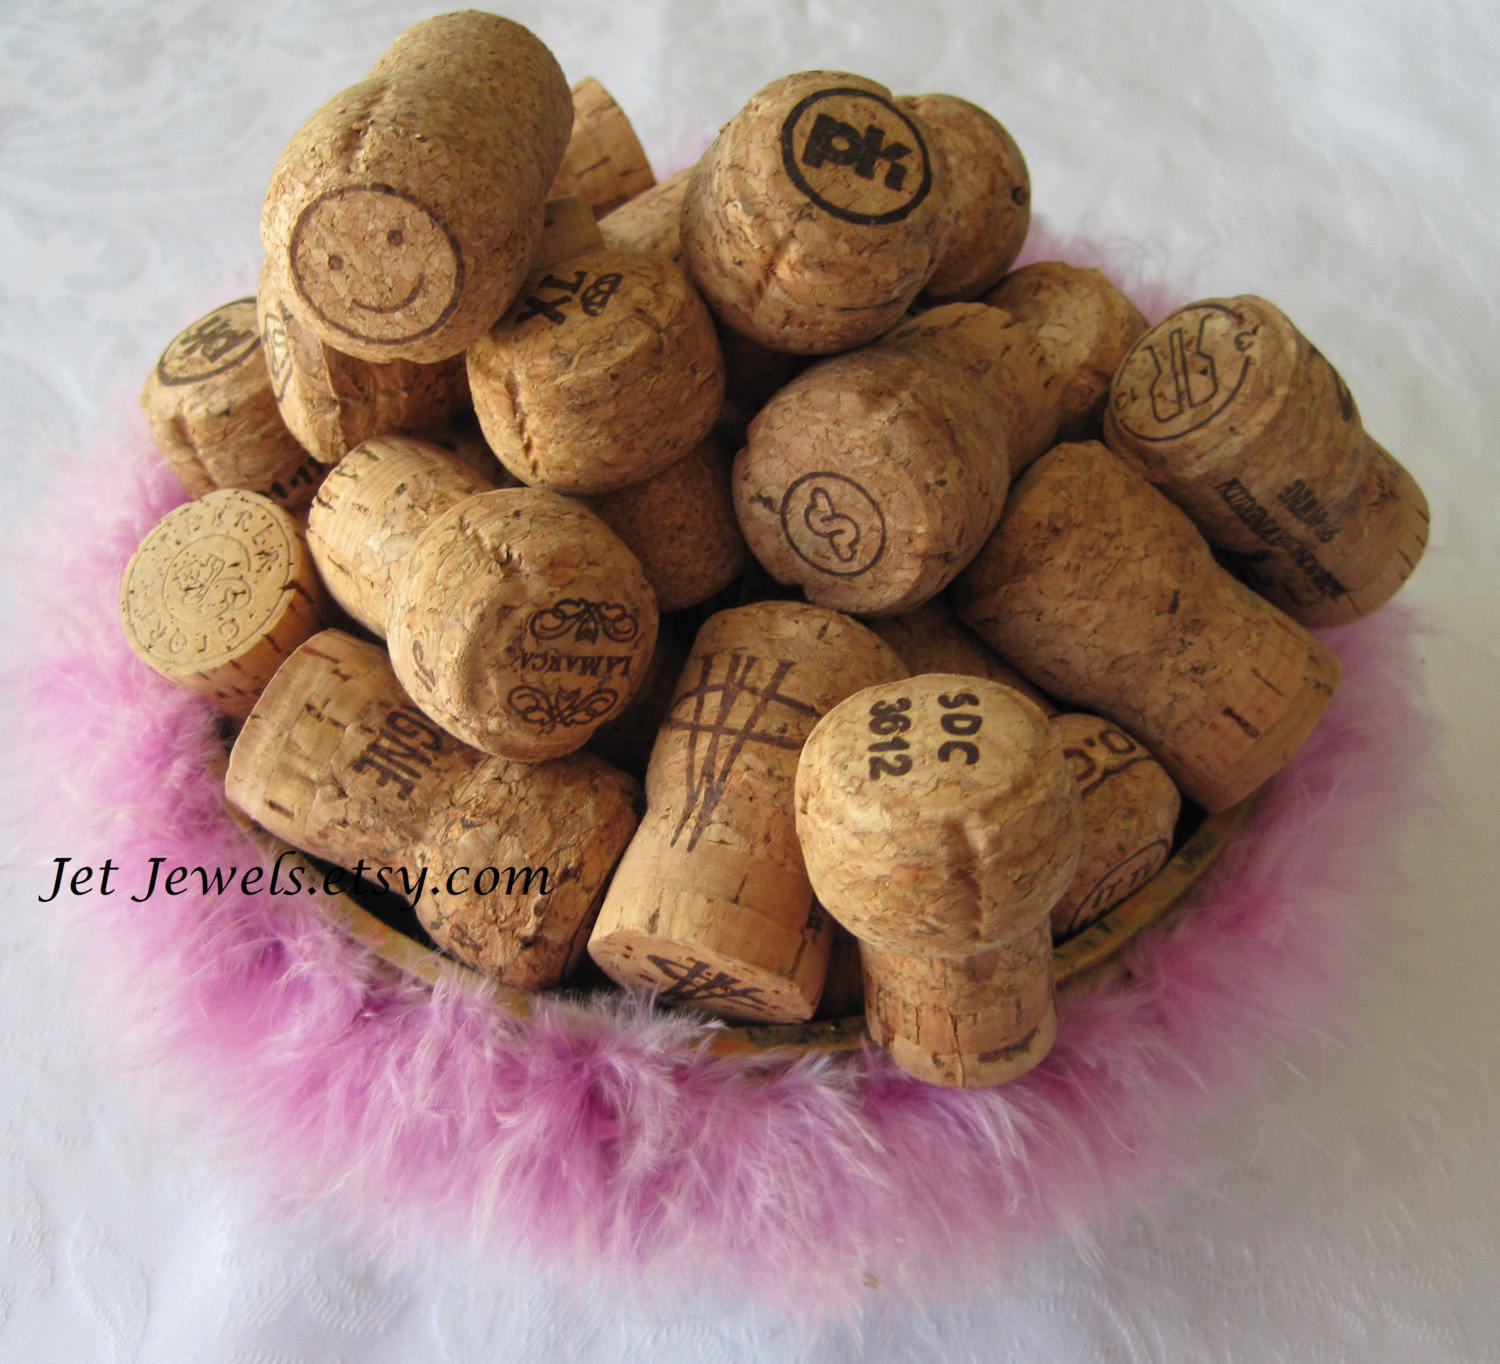 Cork Halves - Pre Cut Used Wine Corks for Crafts